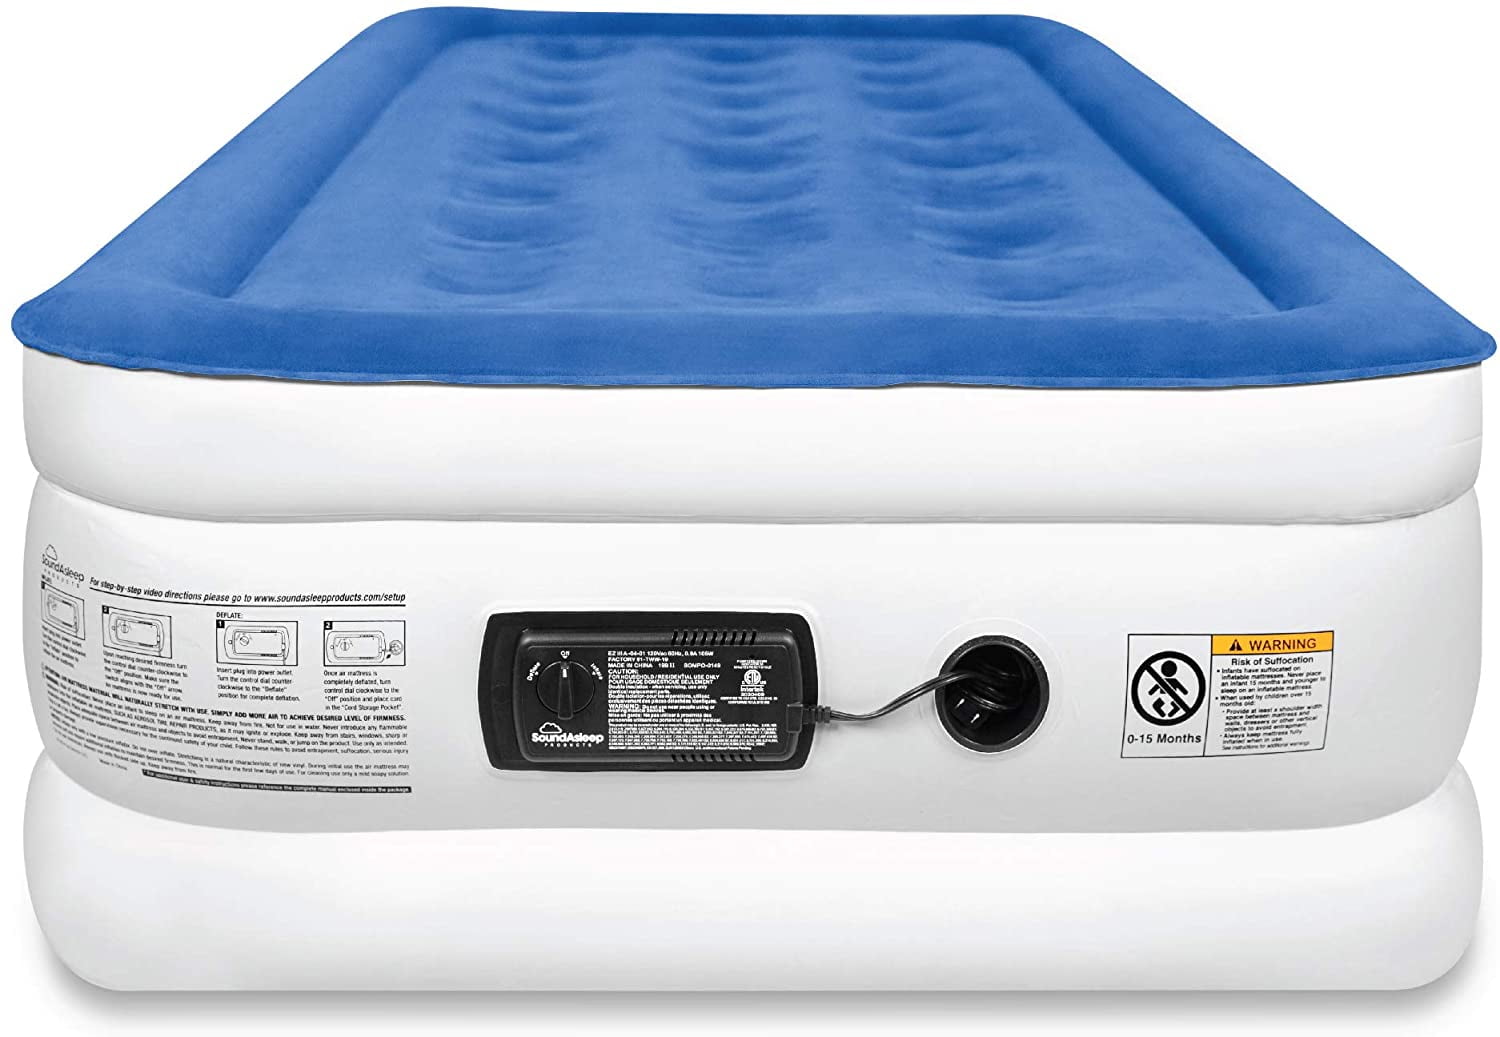 soundasleep products dream series air mattress